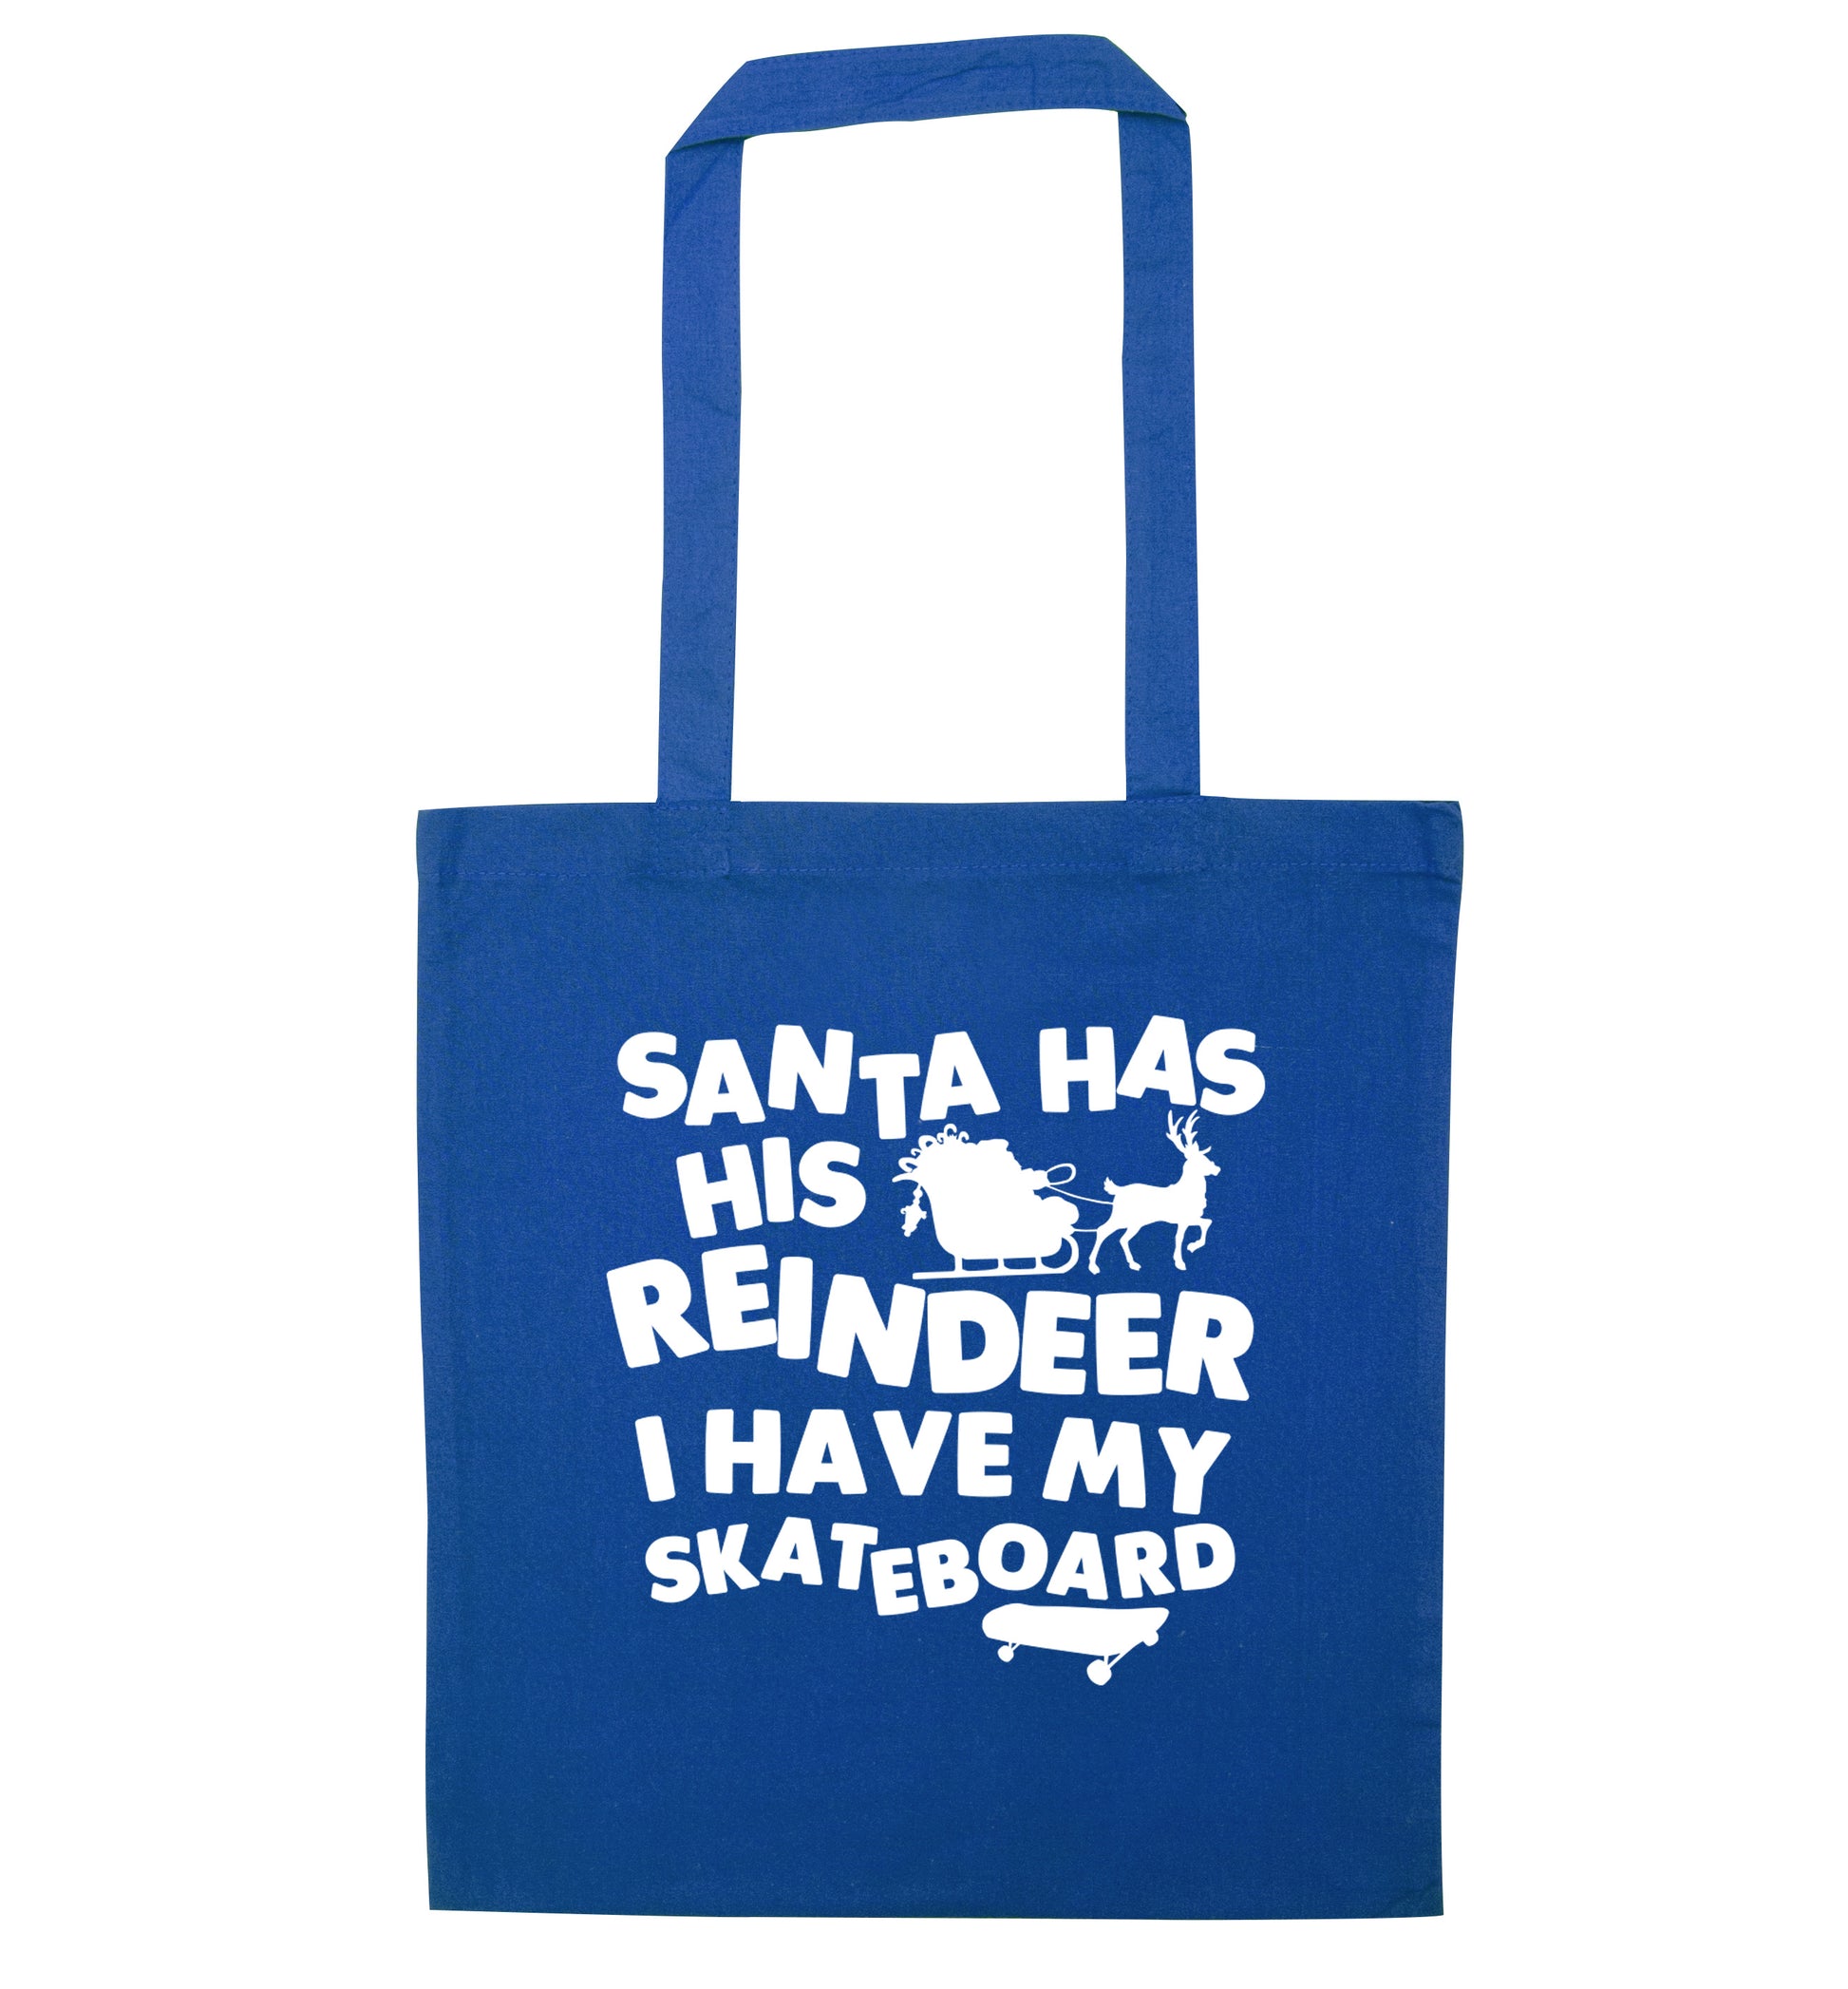 Santa has his reindeer I have my skateboard blue tote bag